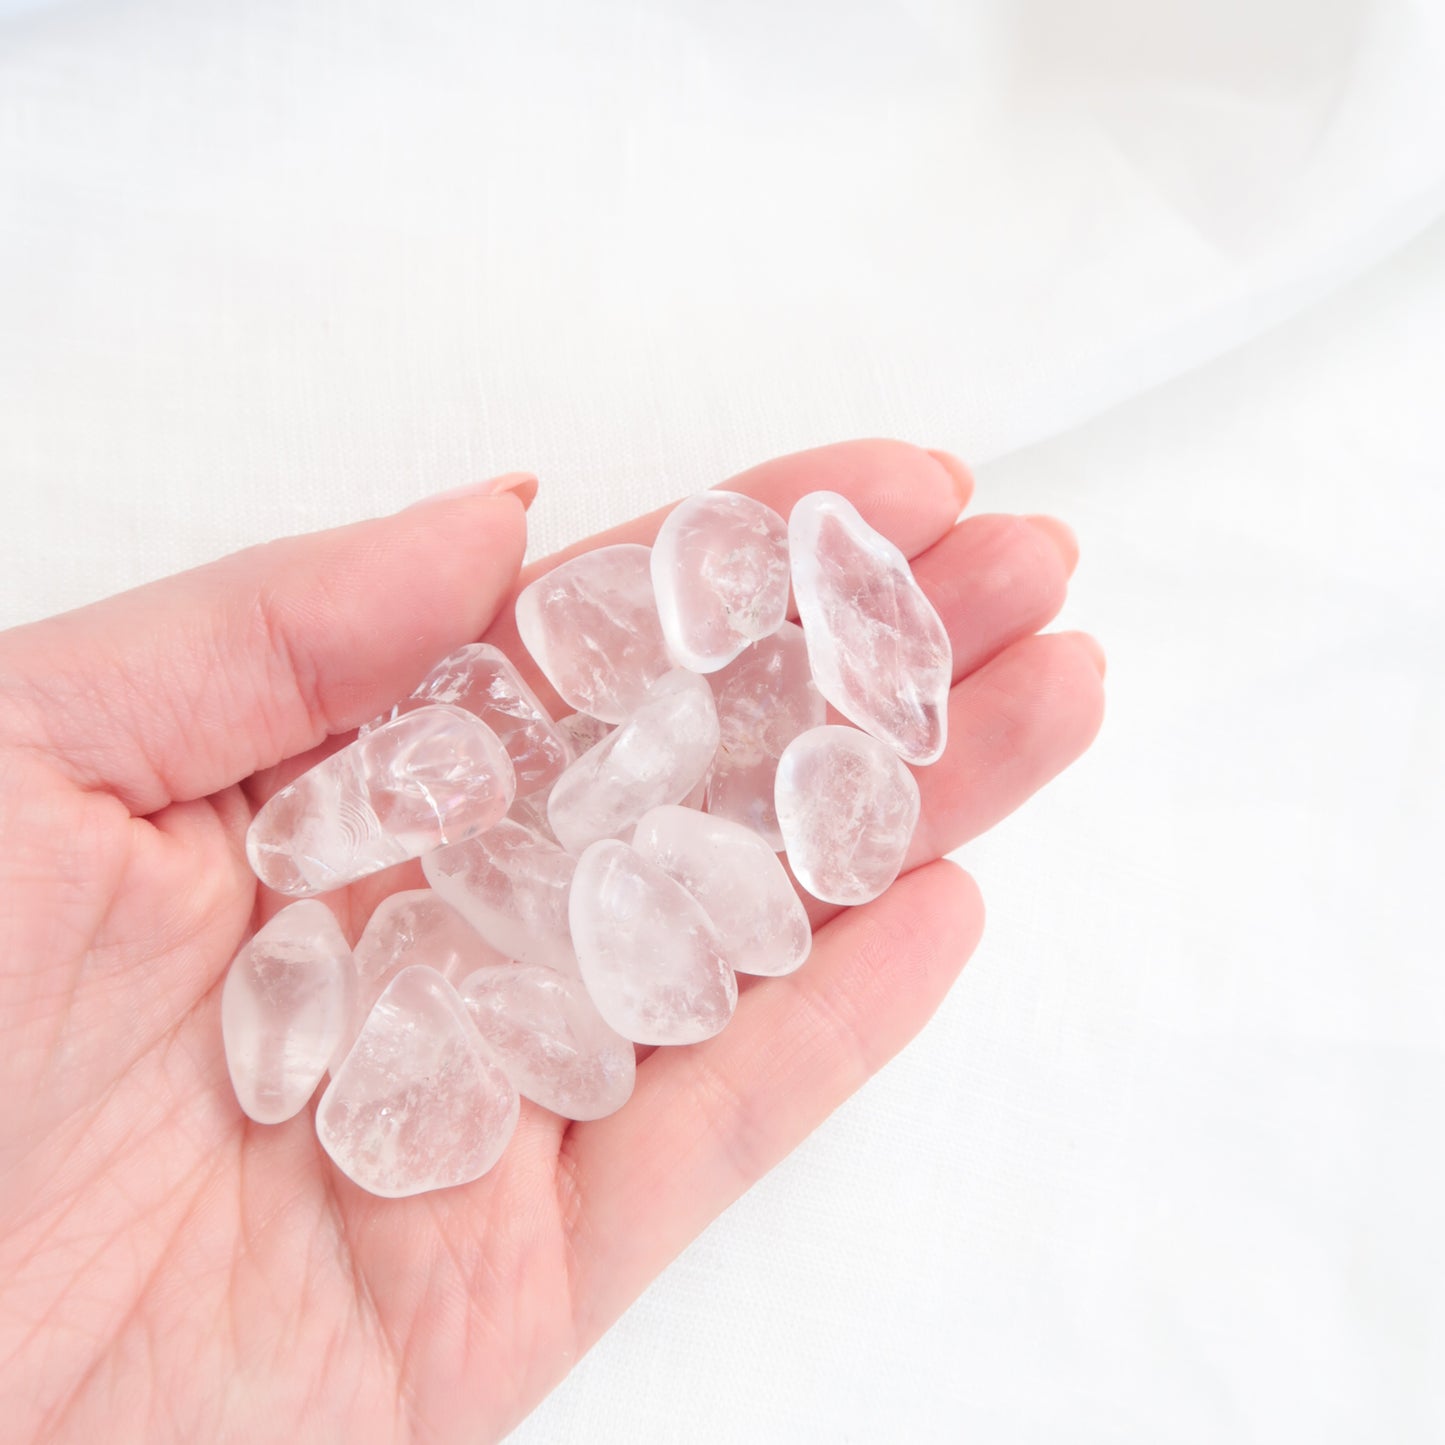 Natural Small Polished Clear Quartz Crystal Tumble Stones